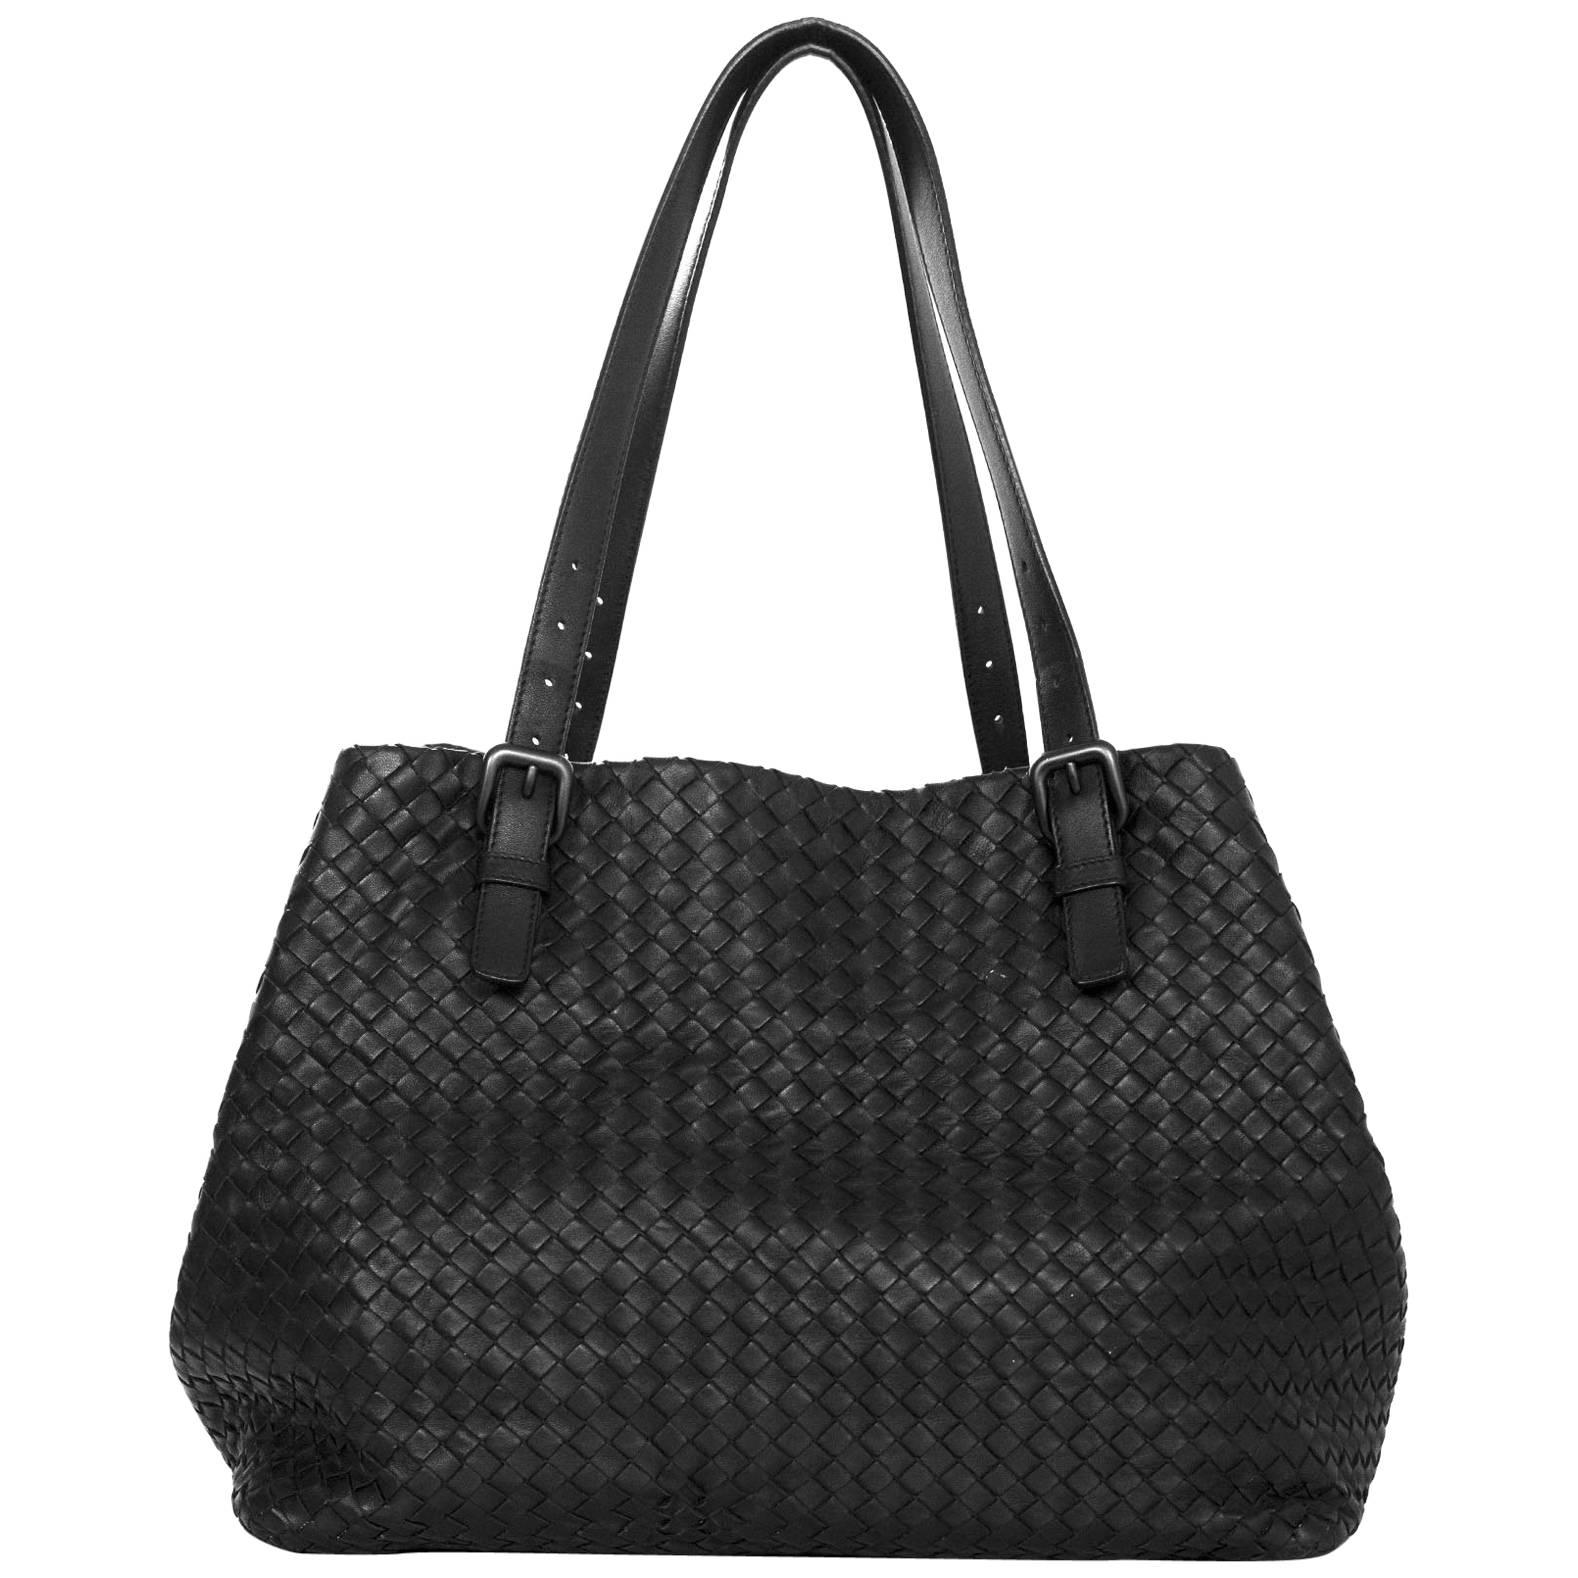 Bottega Veneta Black Intrecciato Large Tote Bag rt. $3, 950